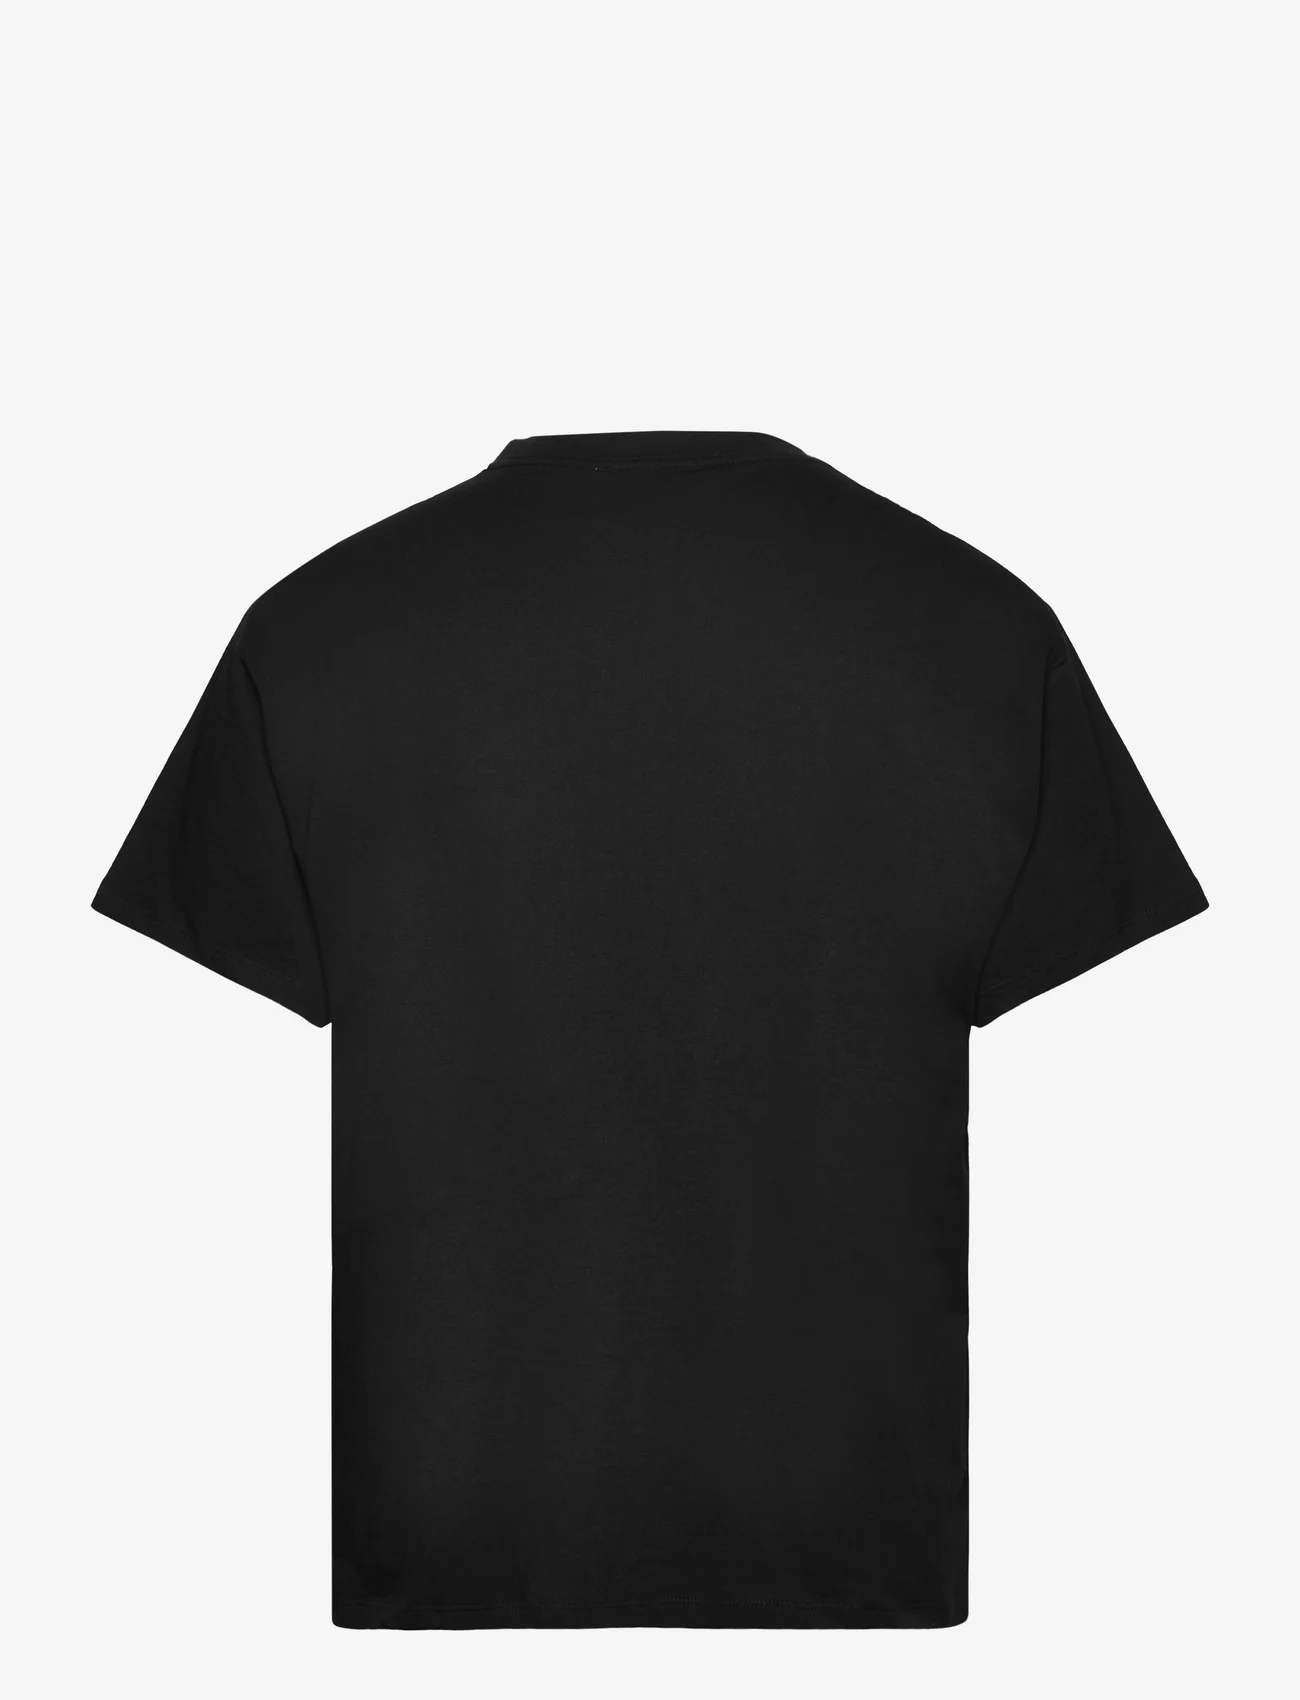 Soulland - ASH T-shirt - korte mouwen - black - 1